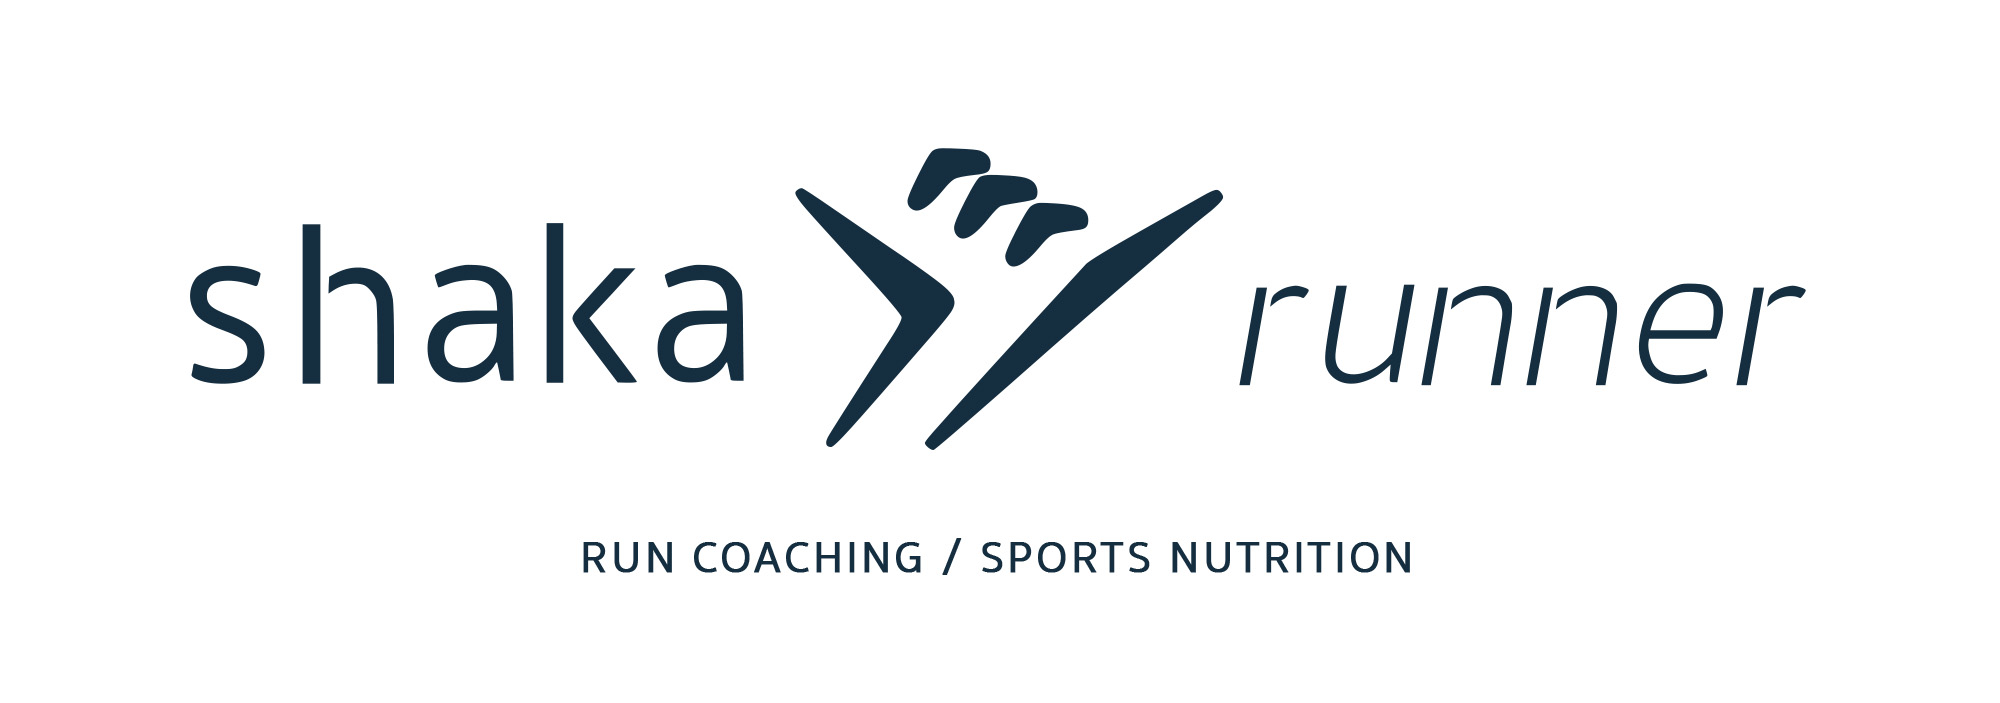 Shaka Runner - running coach